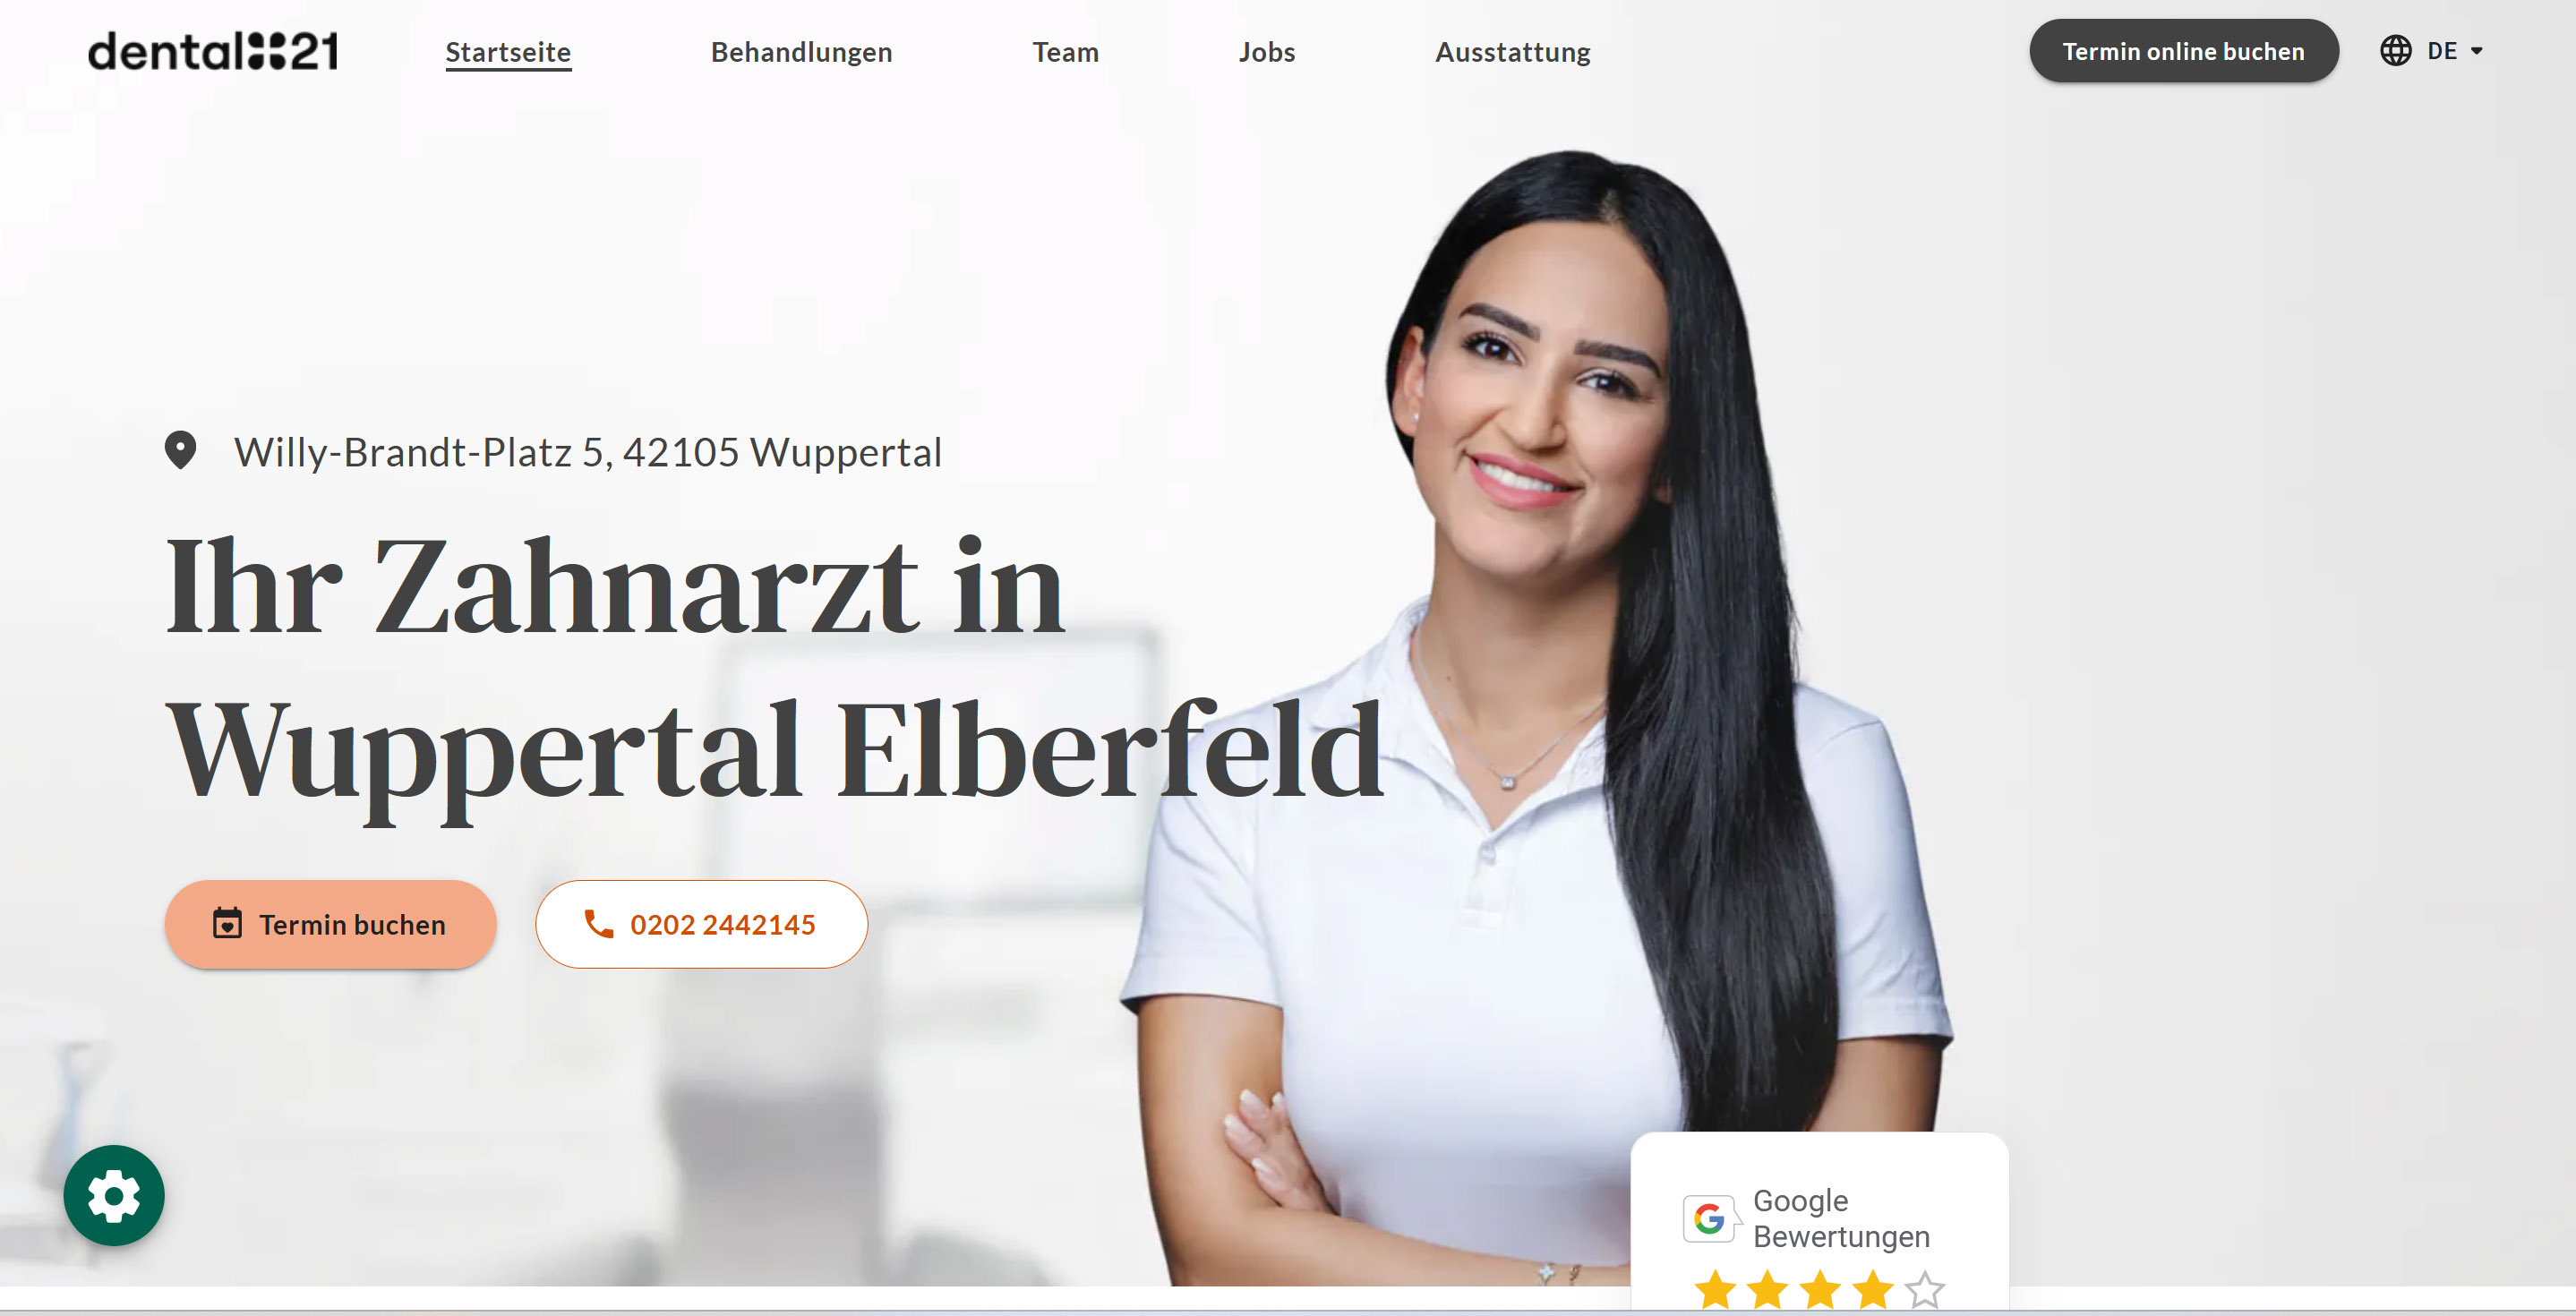 Dental21 Wuppertal <br> Mira Hashash